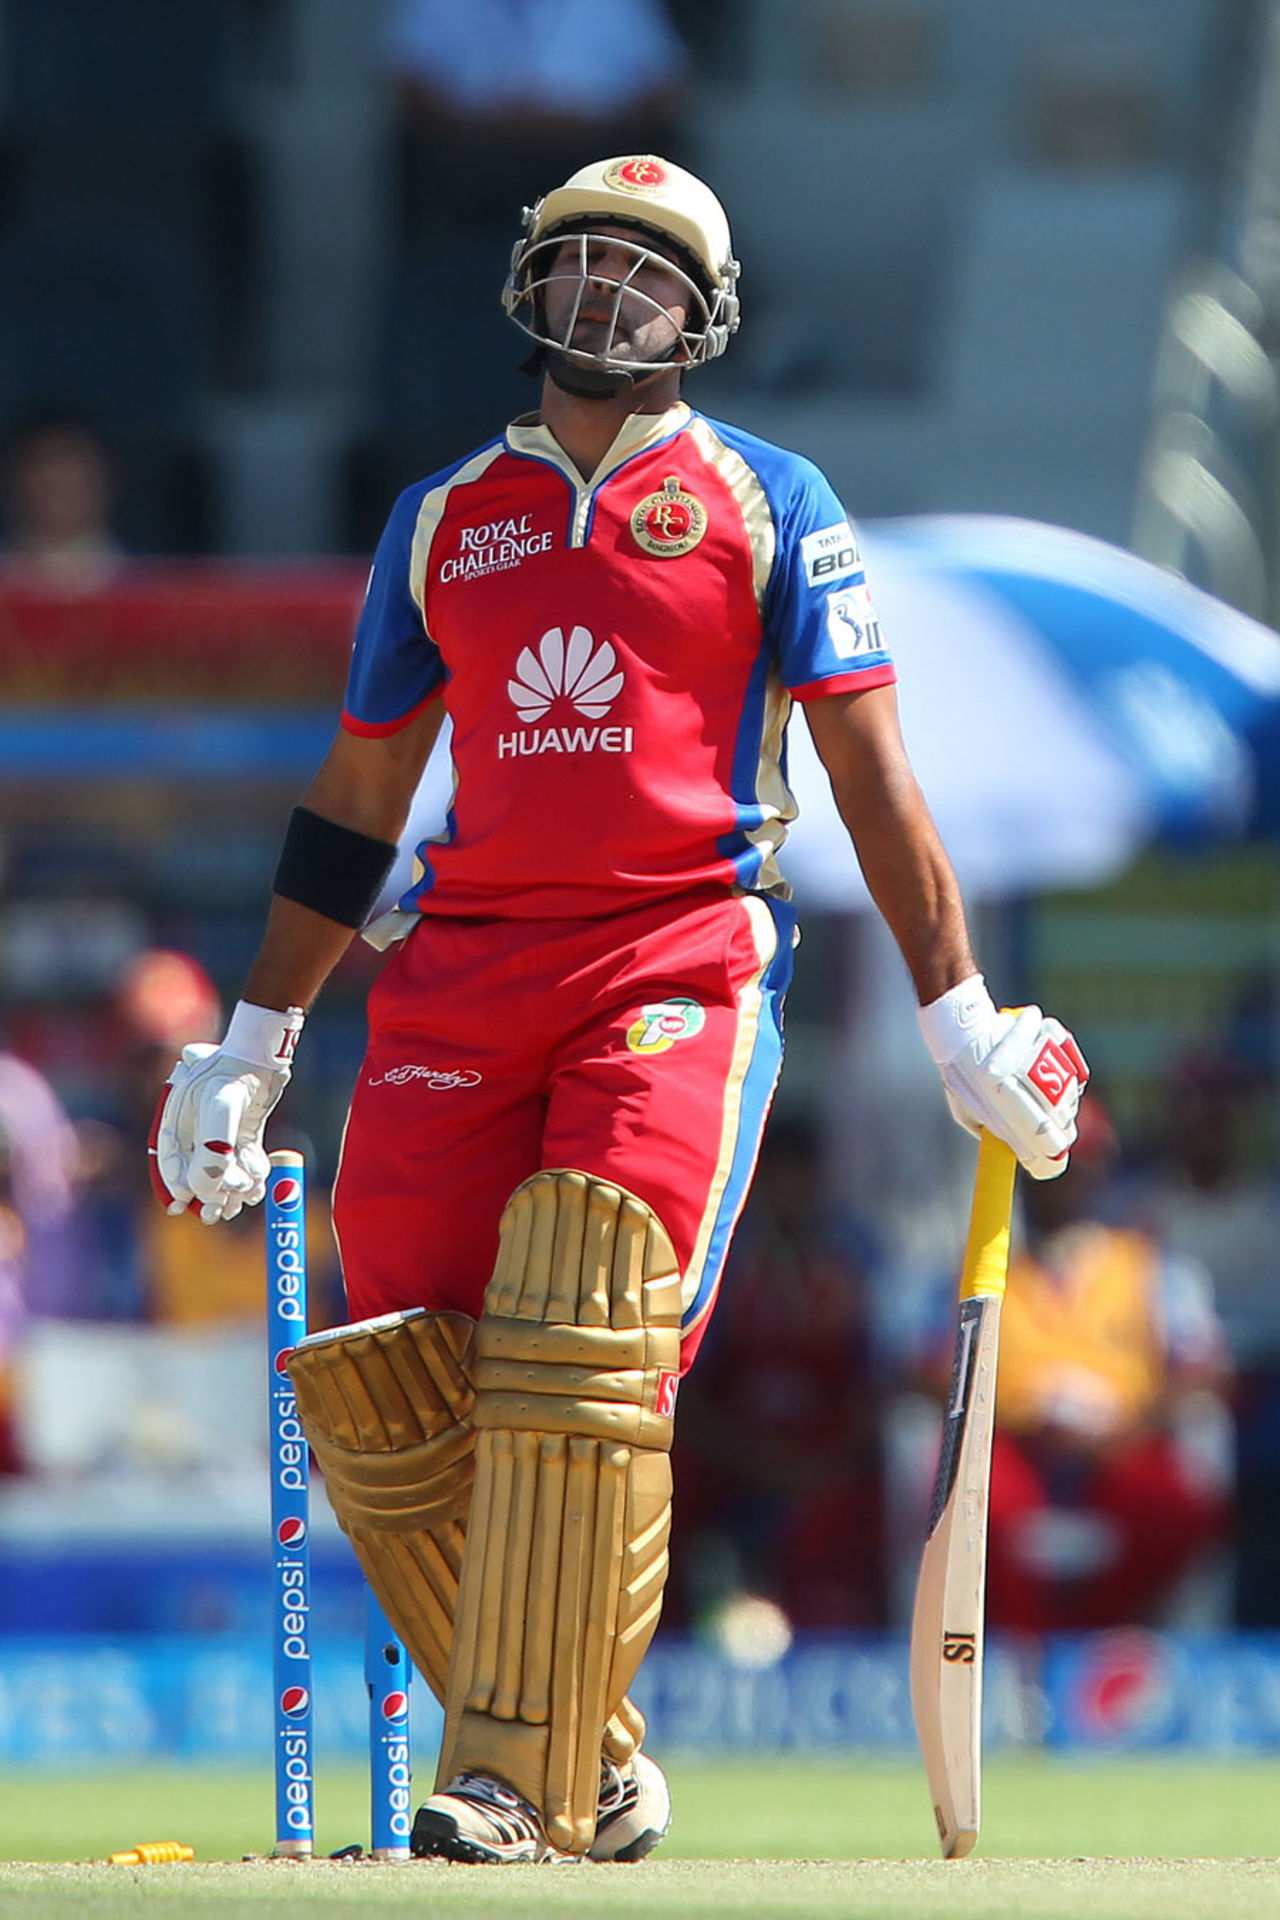 Sachin Rana was bowled by Shane Watson for 3, Royals v Royal Challengers, IPL 2014, Abu Dhabi, April 26, 2014